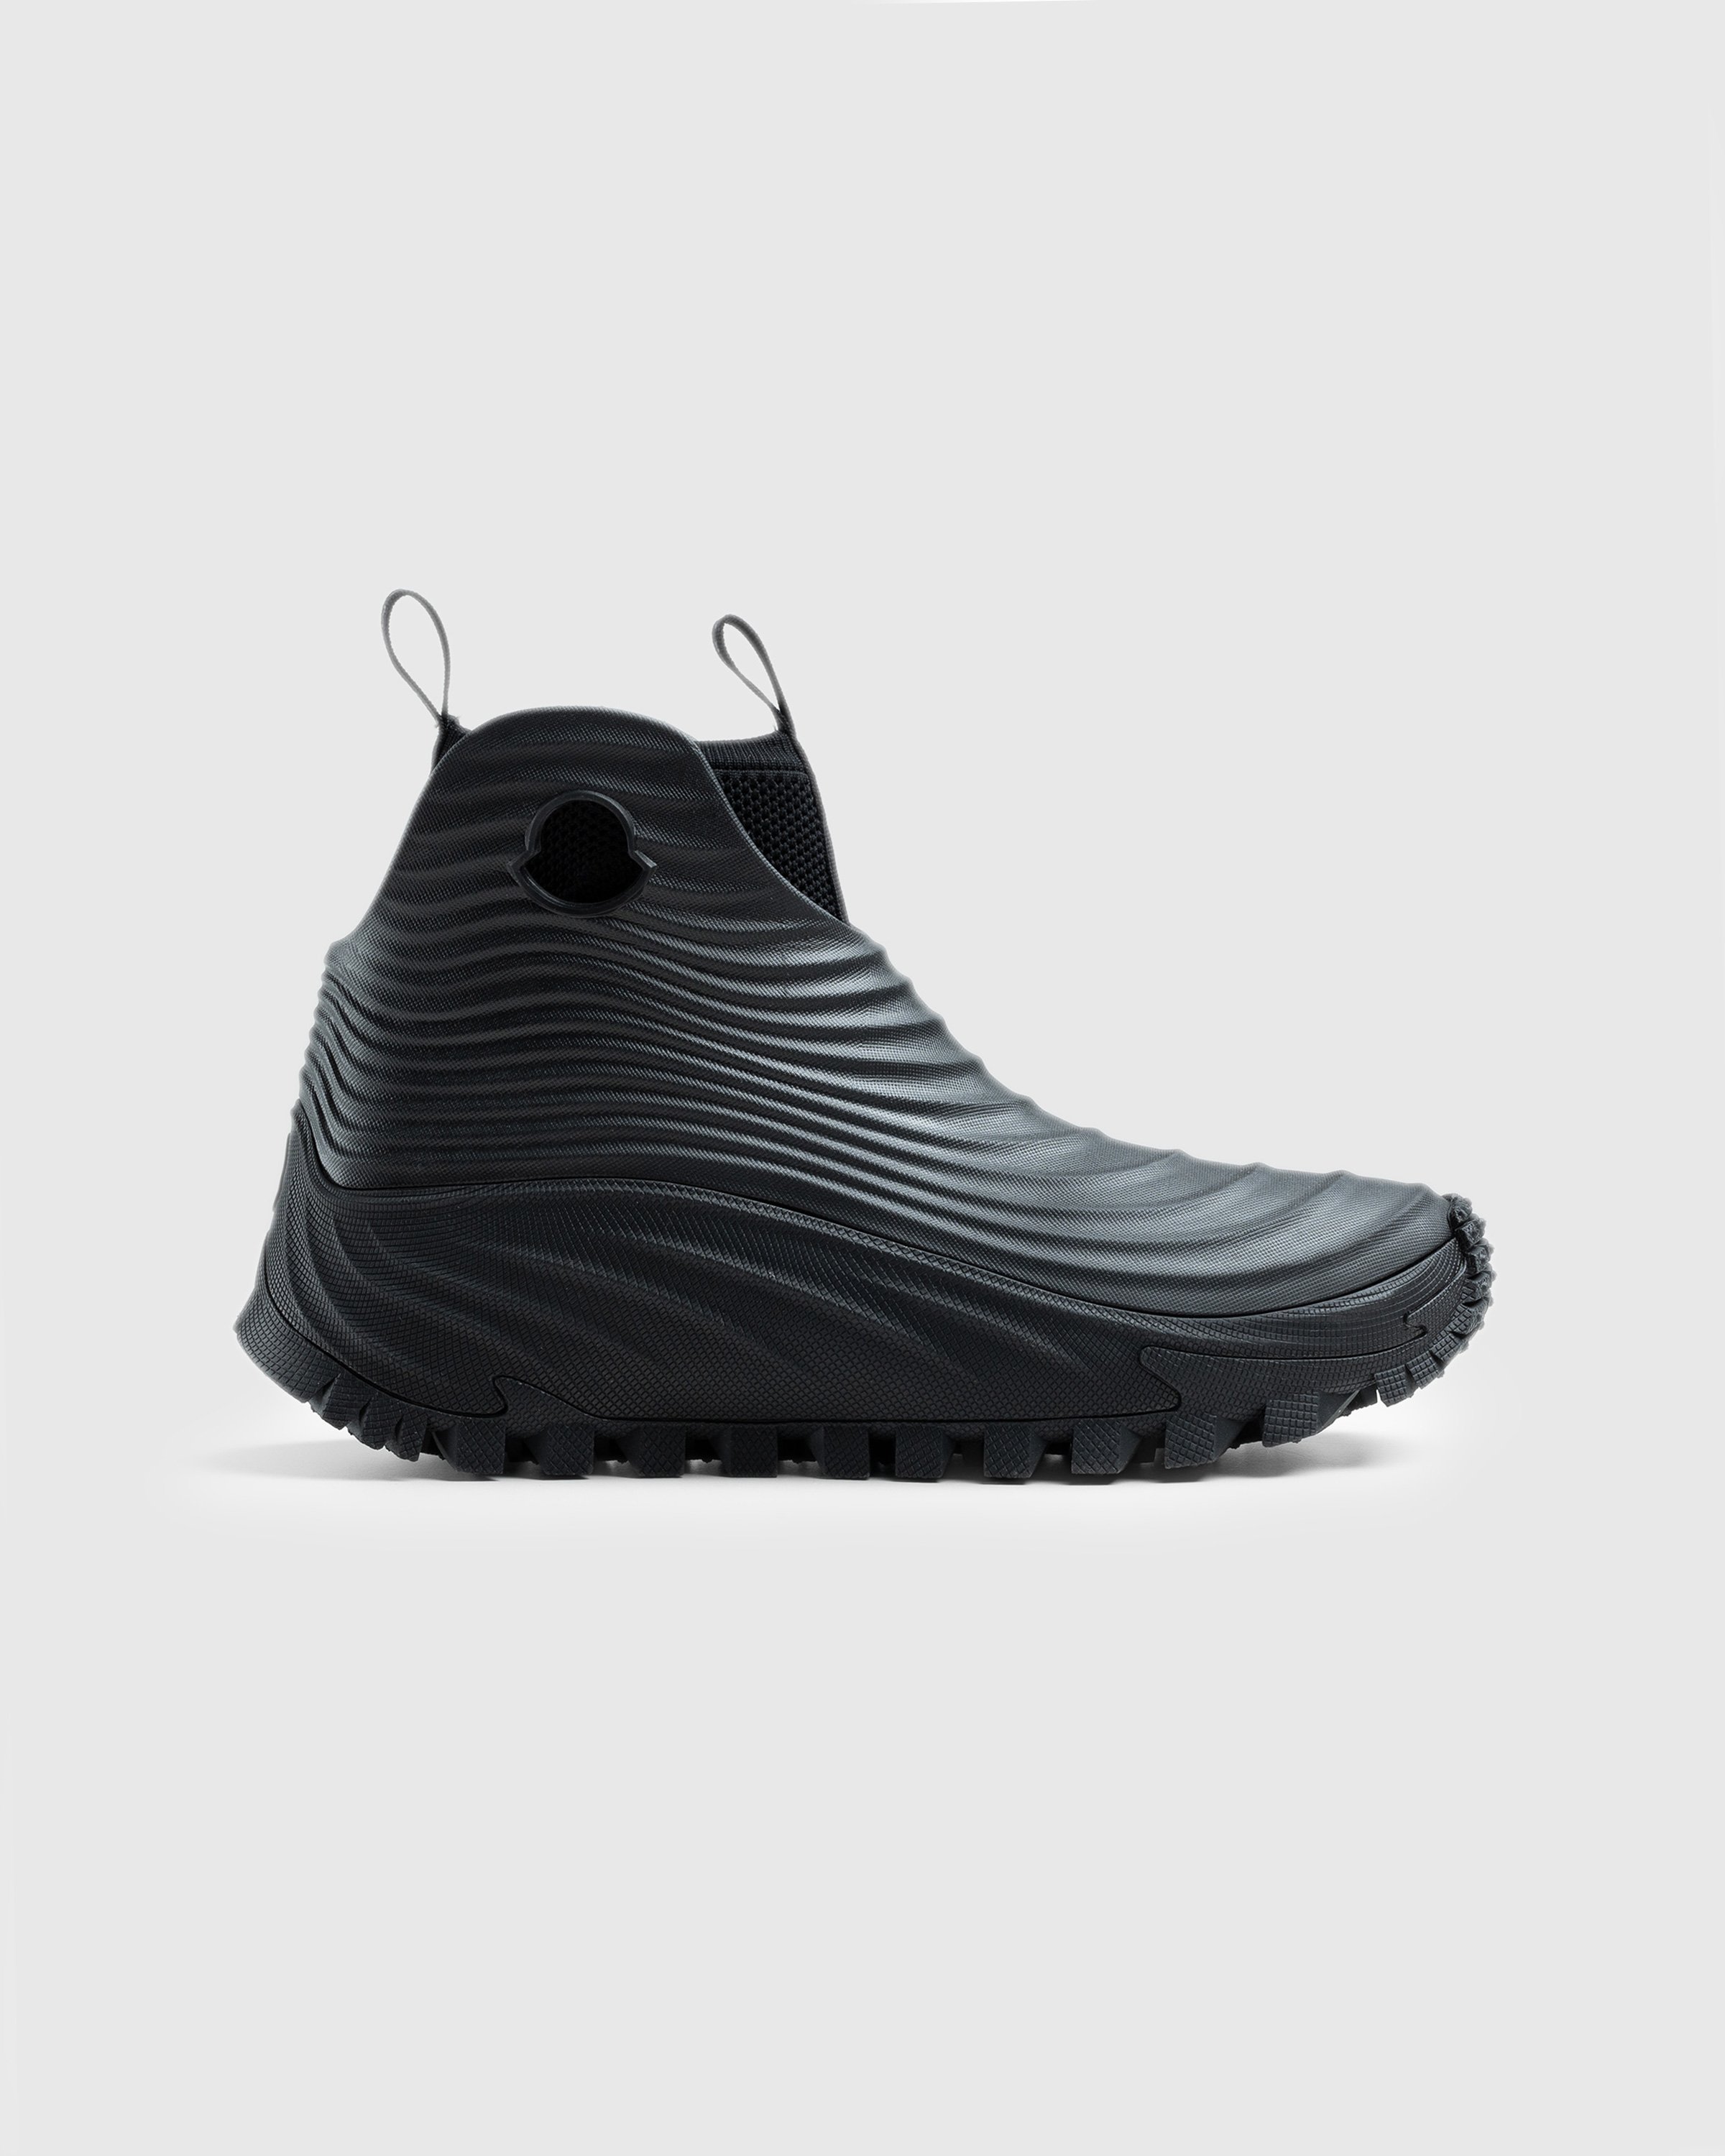 Moncler - Acqua High Rain Boots Black - Footwear - Black - Image 1